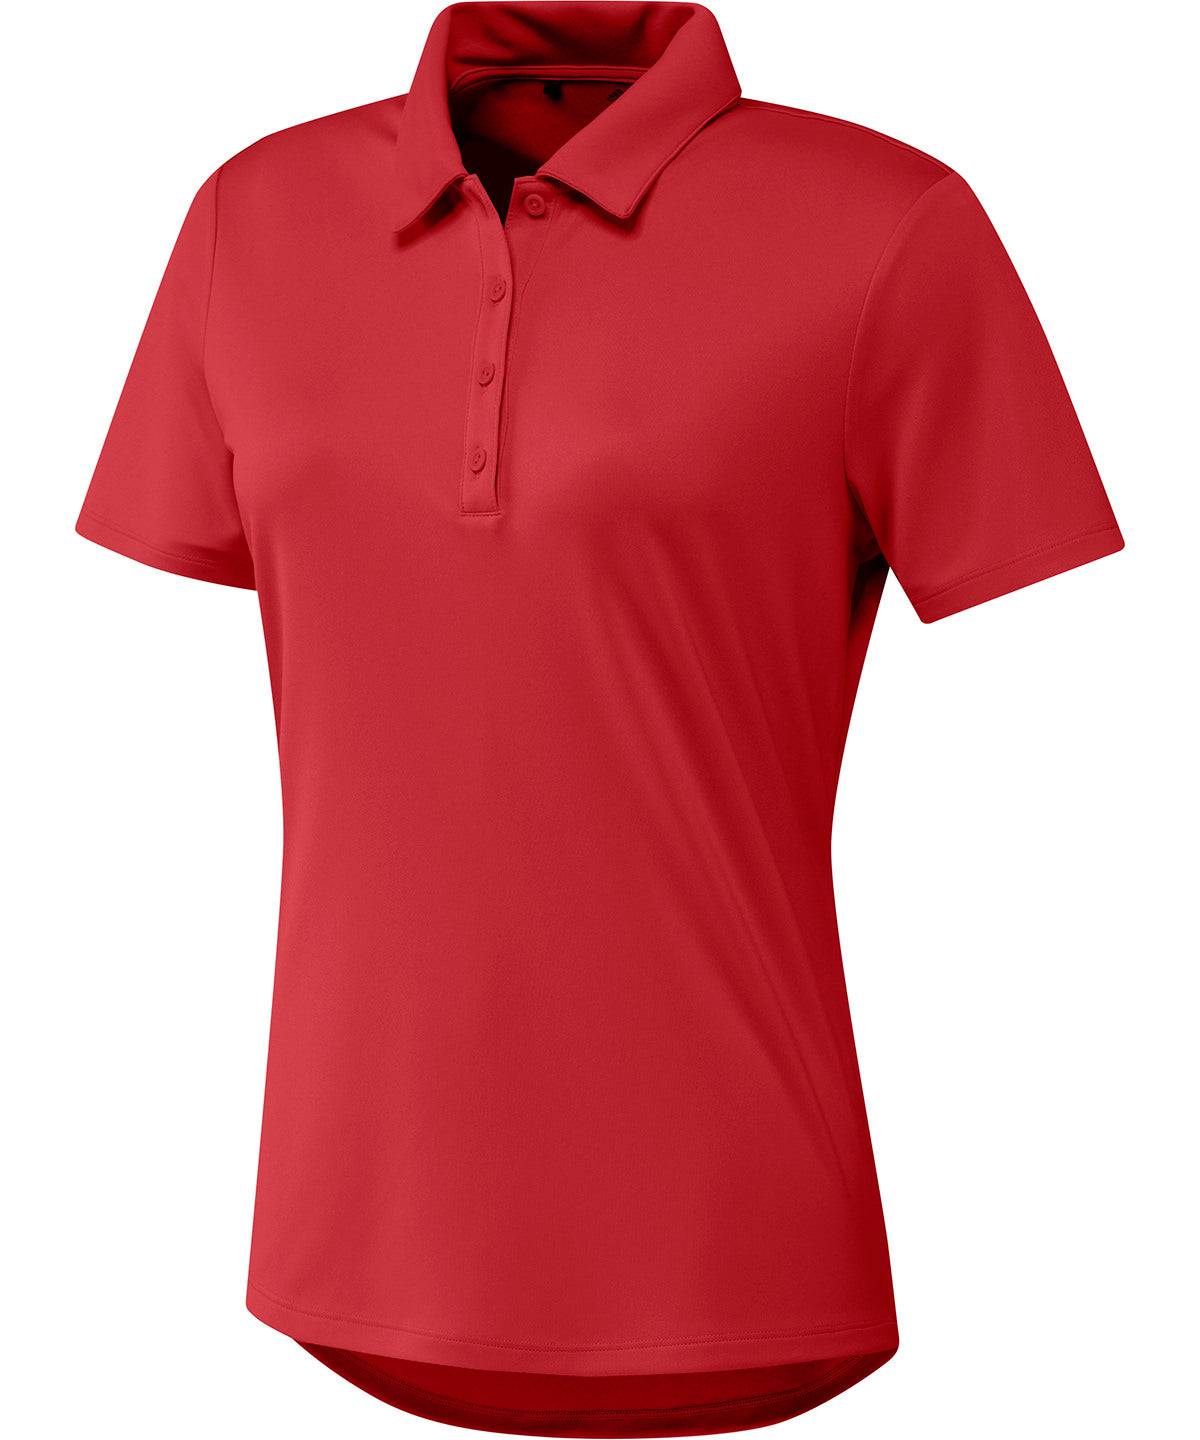 Collegiate Red - Women’s performance Primegreen polo shirt